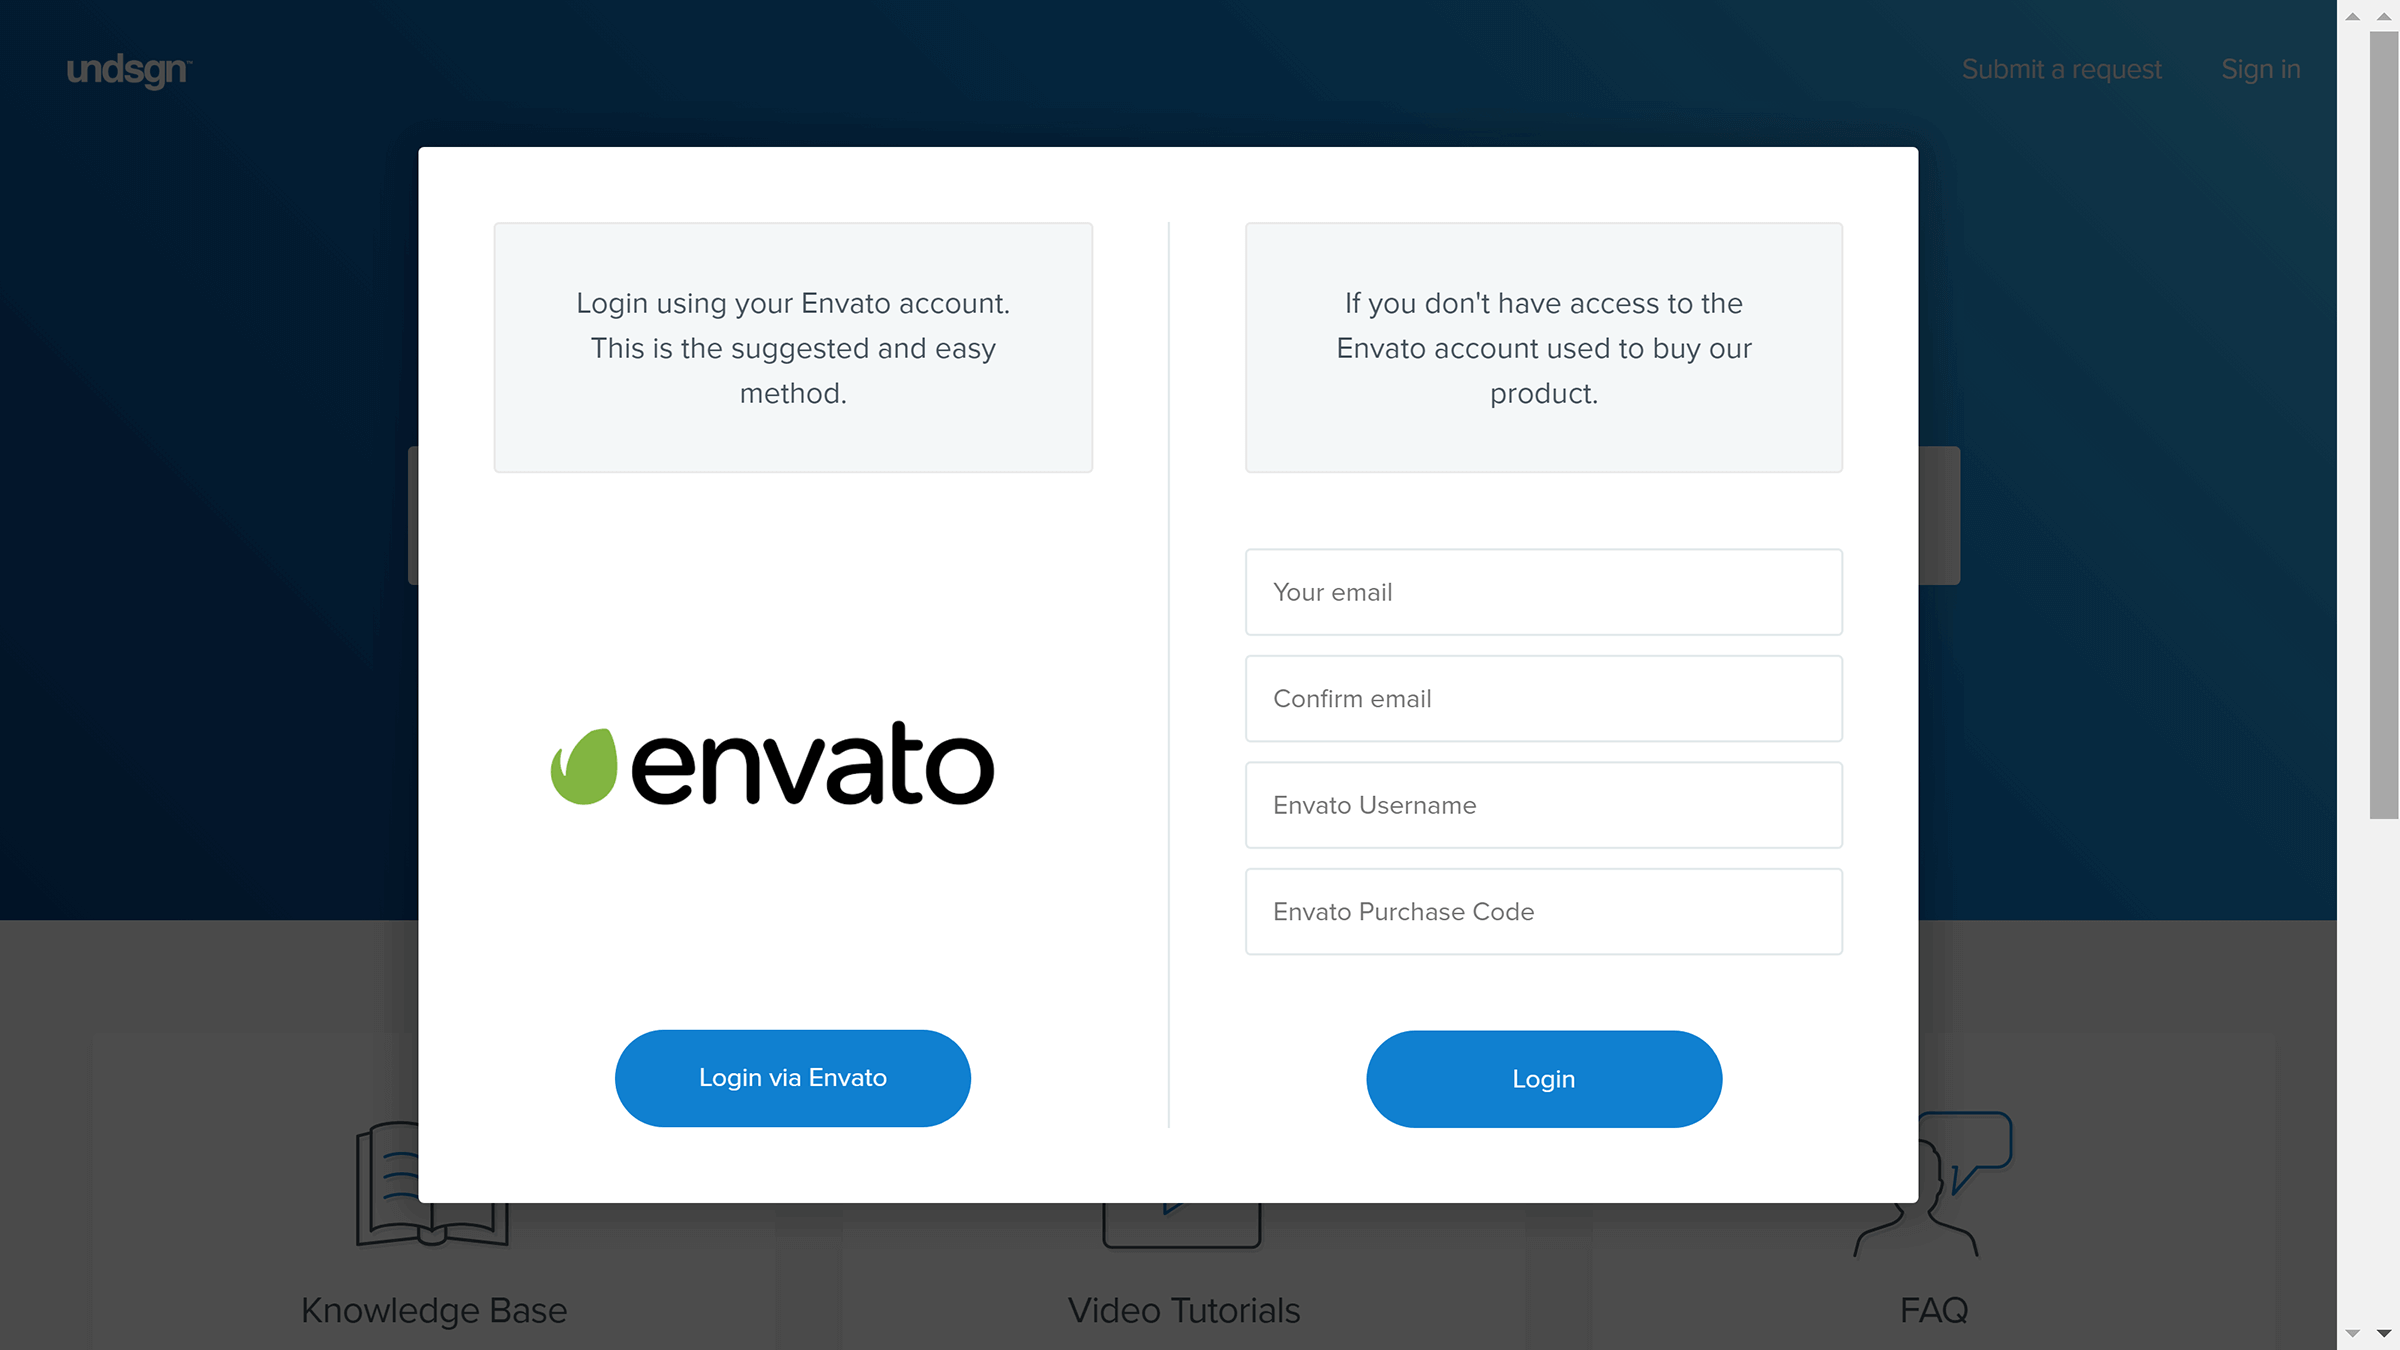 Logging in using your Envato credentials.